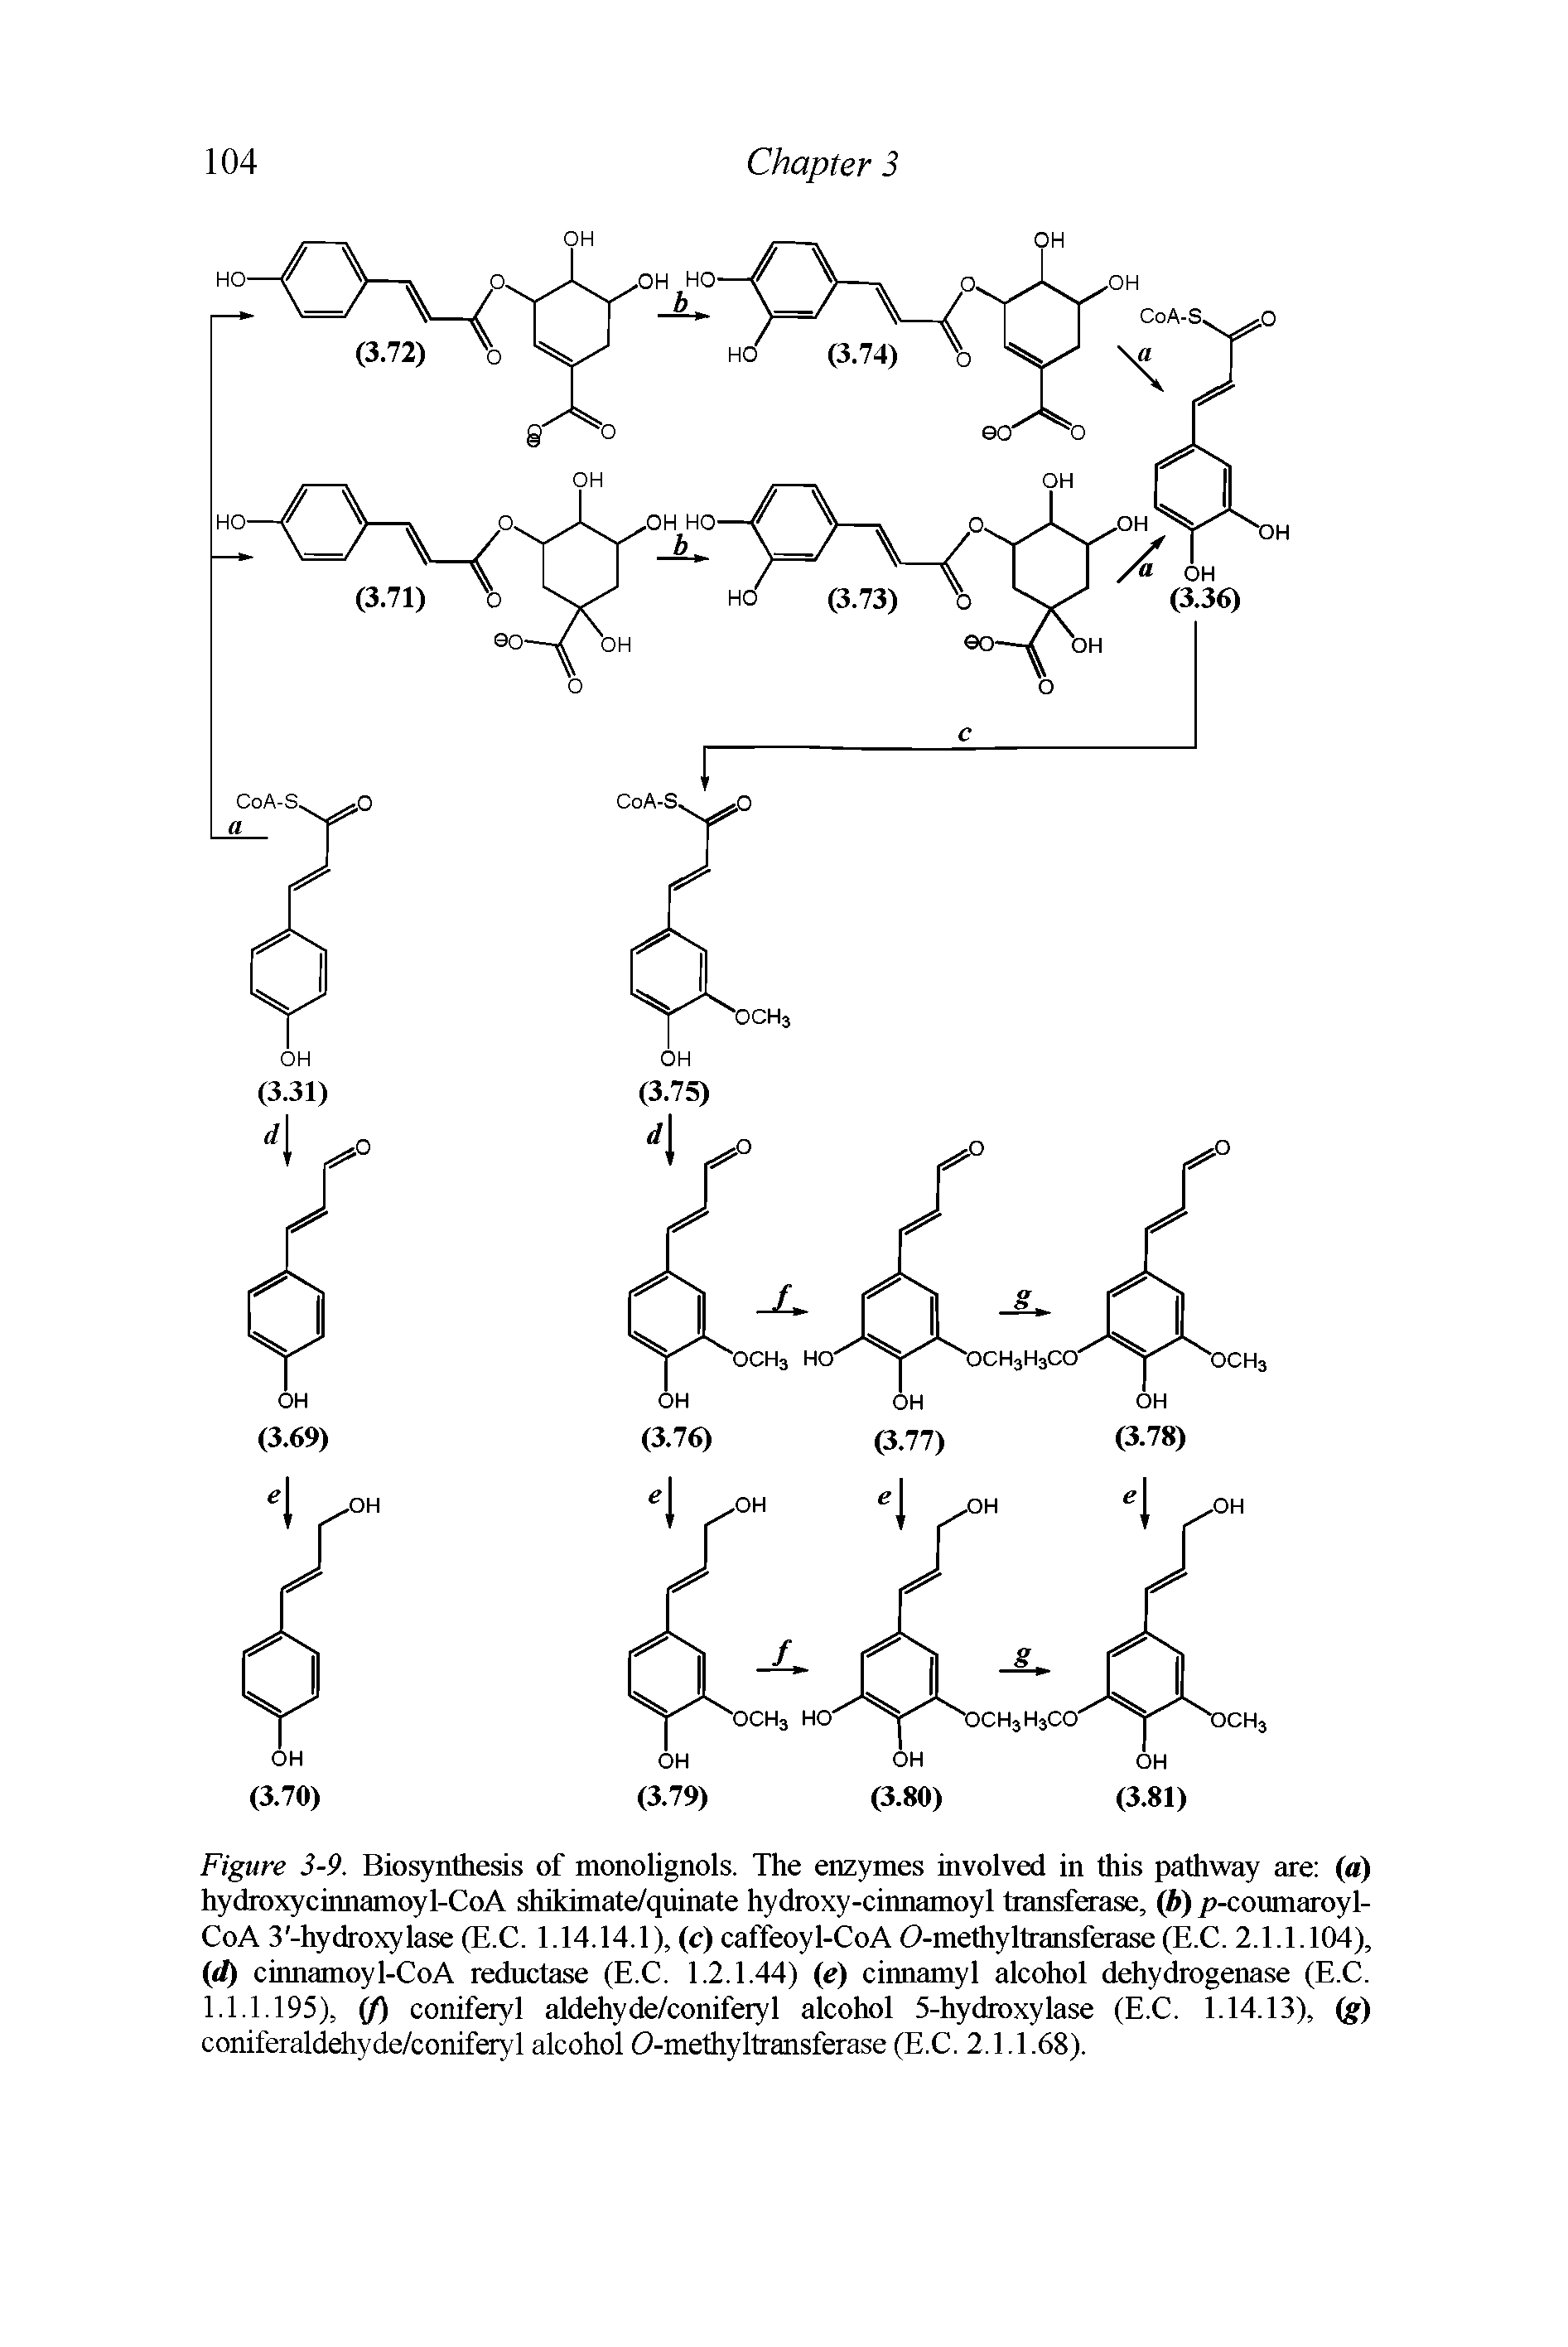 Figure 3-9. Biosynthesis of monolignols. The enzymes involved in this pathway are ( ) hydroxycinnamoyl-CoA shikimate/quinate hydroxy-cinnamoyl transferase, (b) p-coumaroyl-CoA 3 -hydroxylase (E.C. 1.14.14.1), (c) caffeoyl-CoA O-methy 1 Iranslerasc (E.C. 2.1.1.104), (d) cinnamoyl-CoA reductase (E.C. 1.2.1.44) (e) cinnamyl alcohol dehydrogenase (E.C. 1.1.1.195), (f) coniferyl aldehyde/coniferyl alcohol 5-hydroxylase (E.C. 1.14.13), (g) coniferaldehyde/coniferyl alcohol O-methyltransferase (E.C. 2.1.1.68).